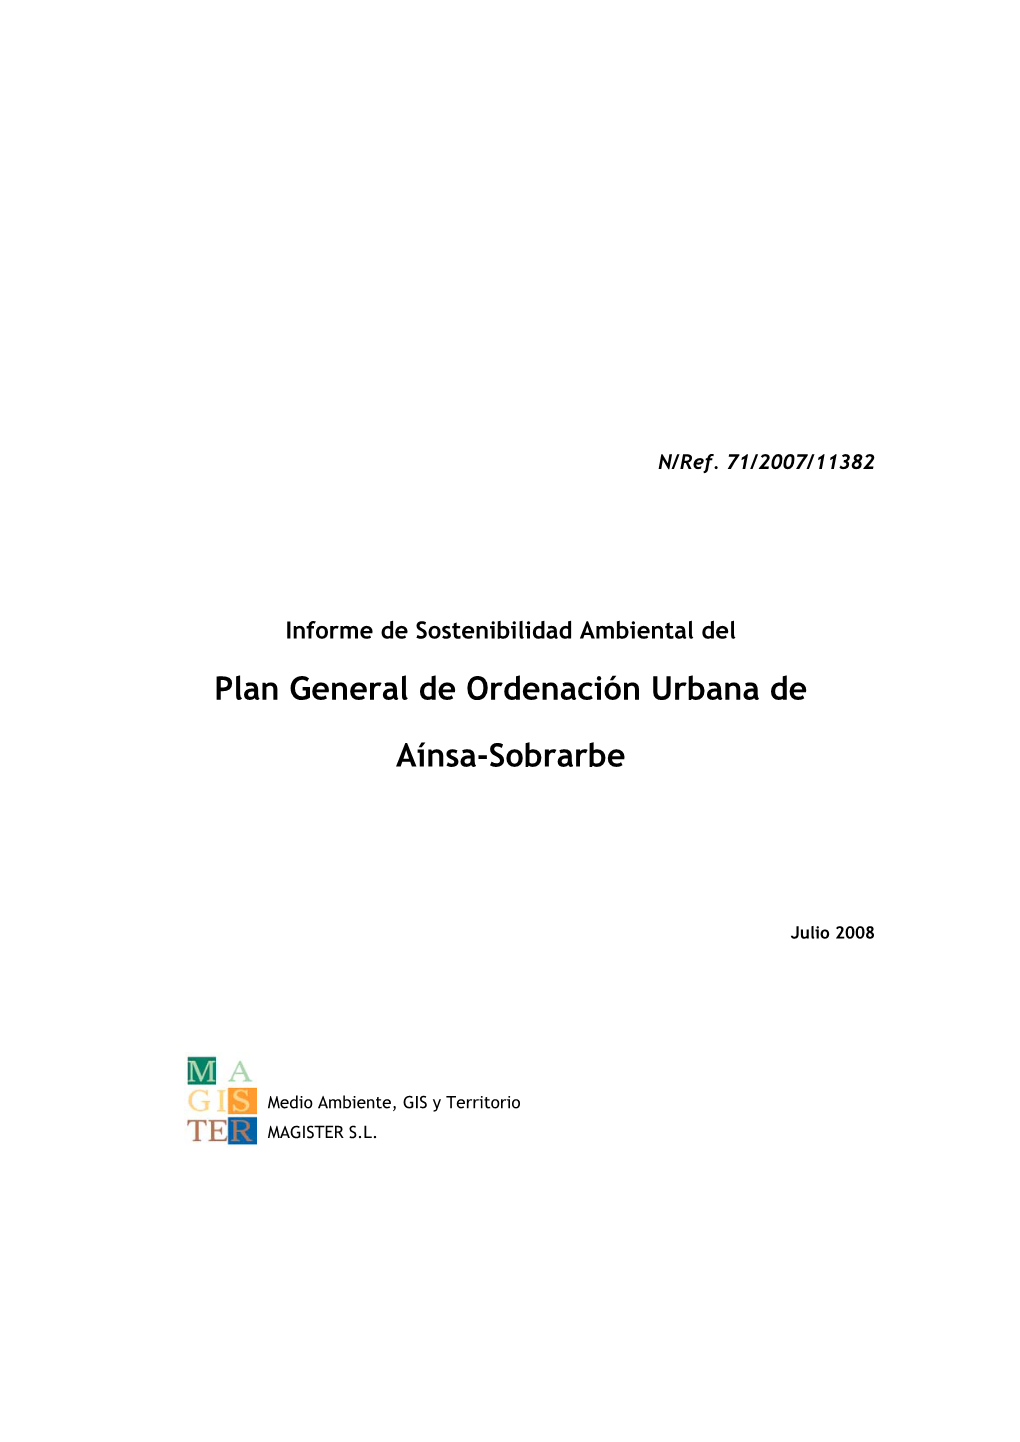 Plan General De Ordenación Urbana De Aínsa-Sobrarbe